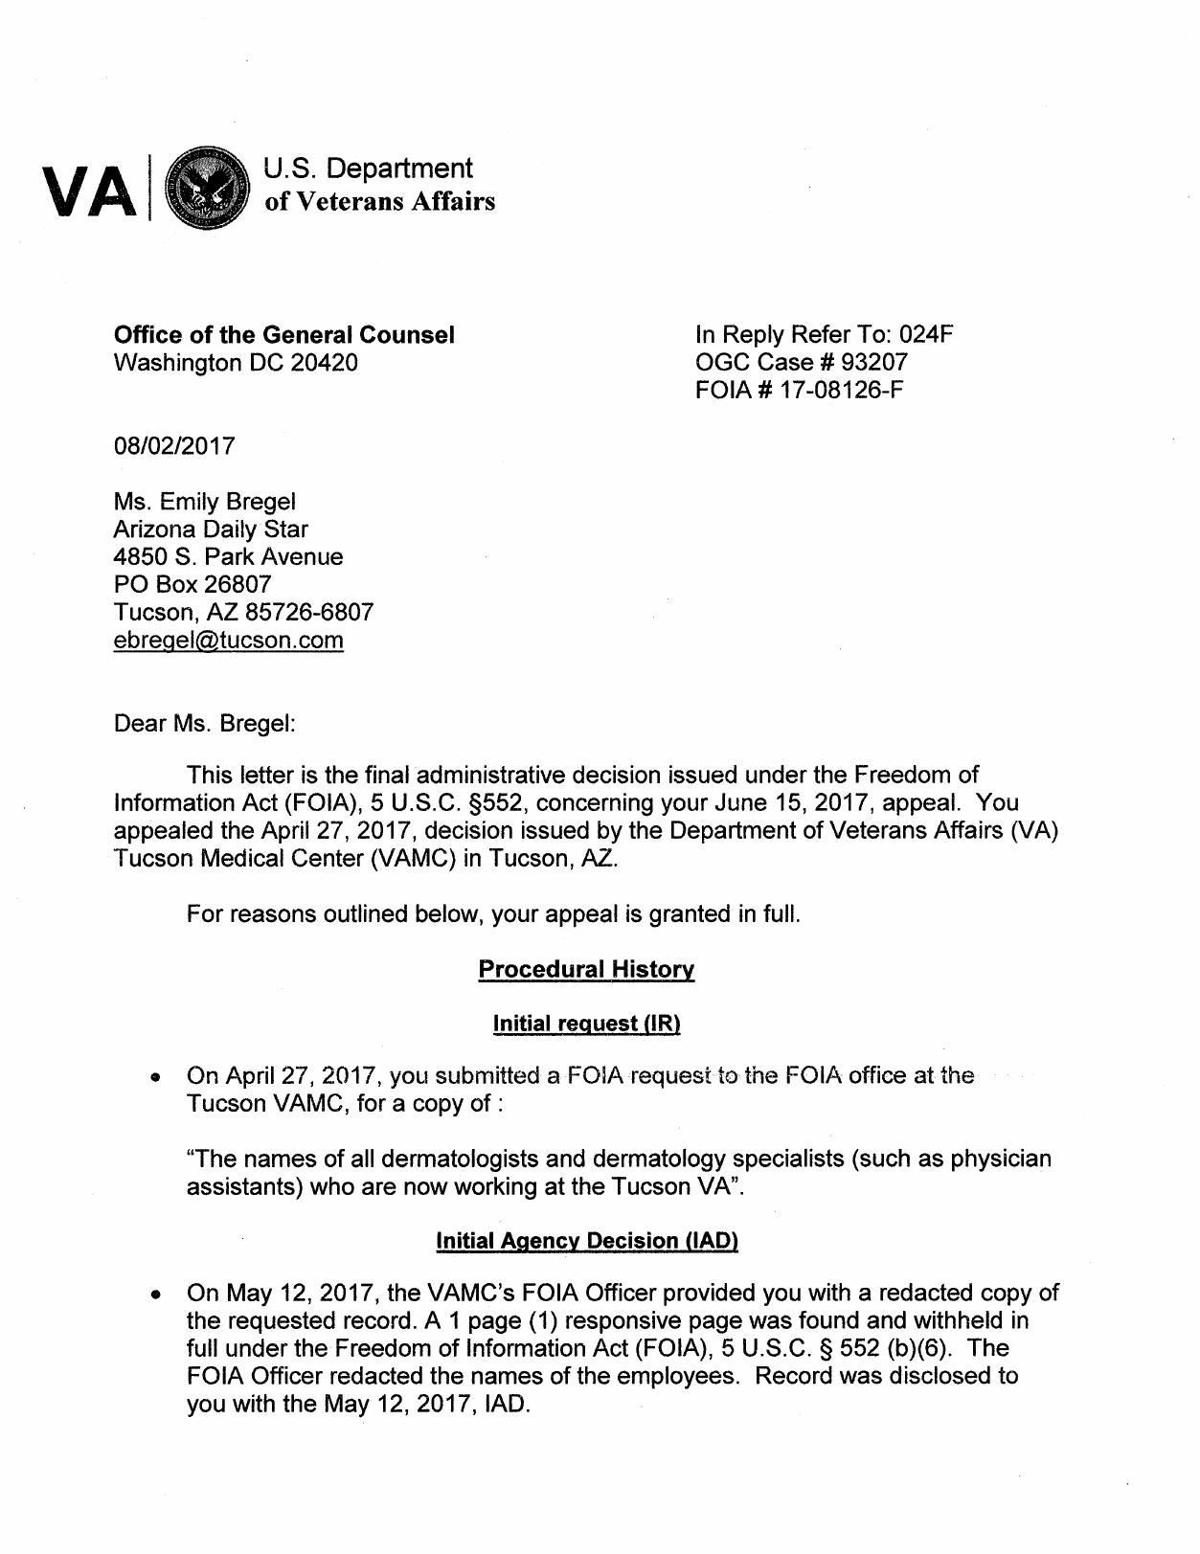 VA appeal decision